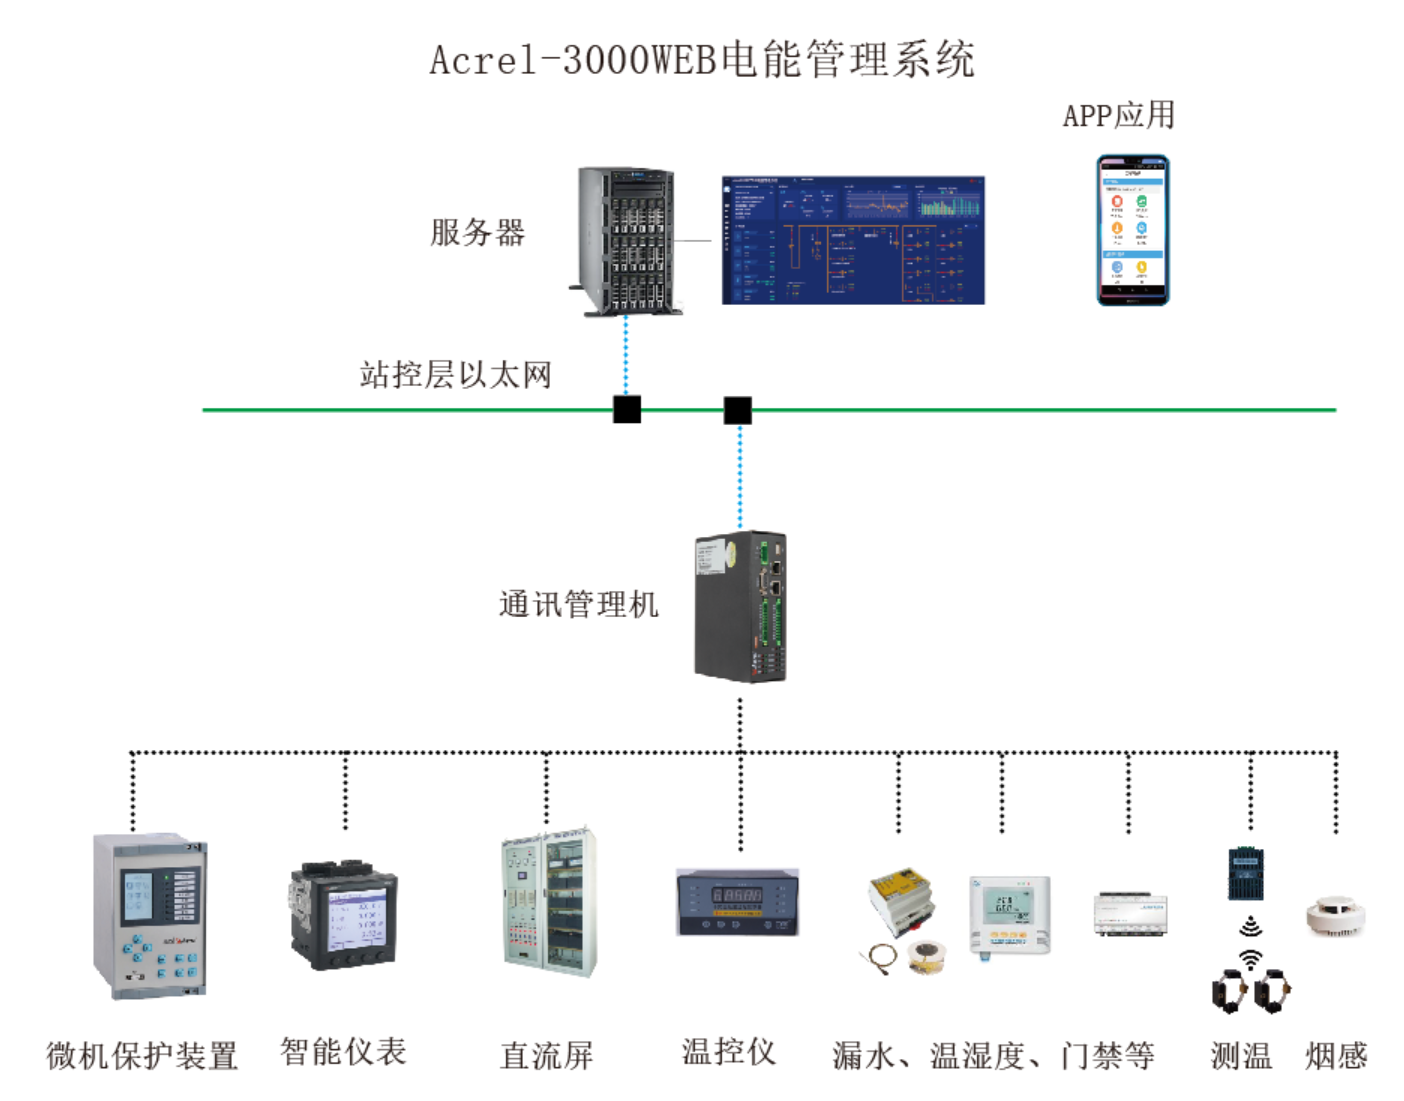 Acrel-3000WEB 电能管理系统